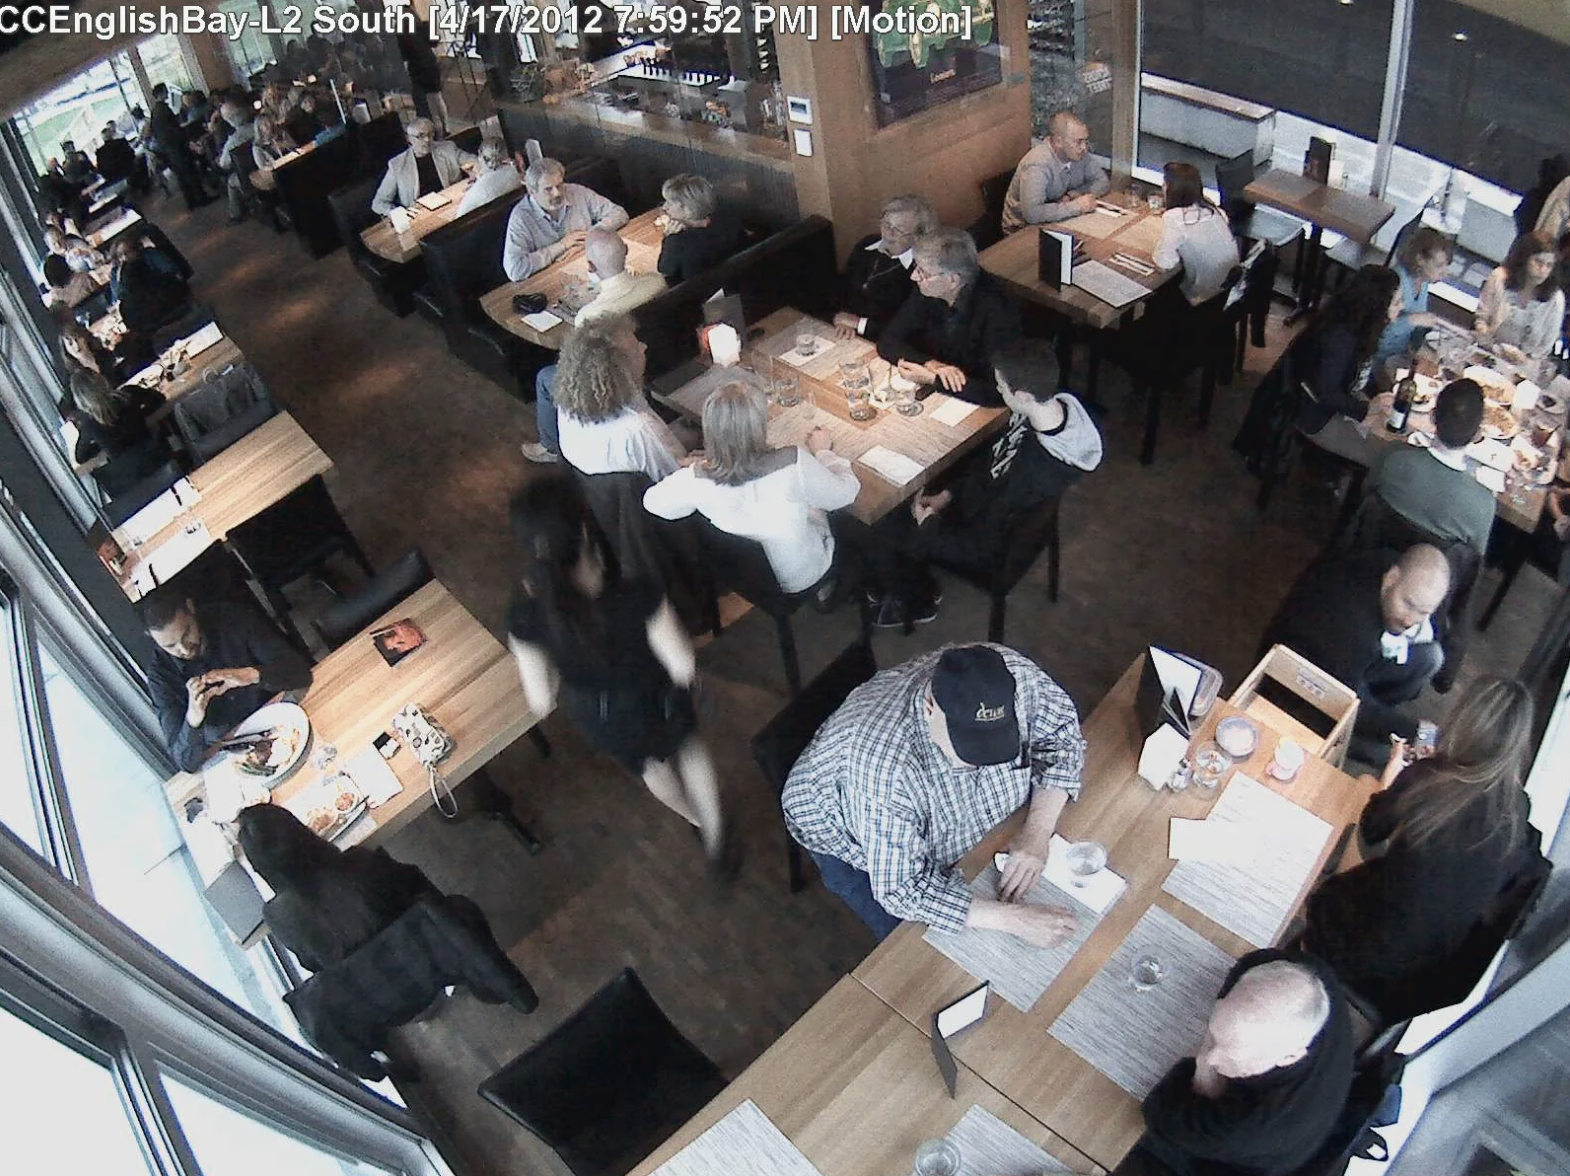 Restaurant view on a surveillance camera | Source: Shutterstock